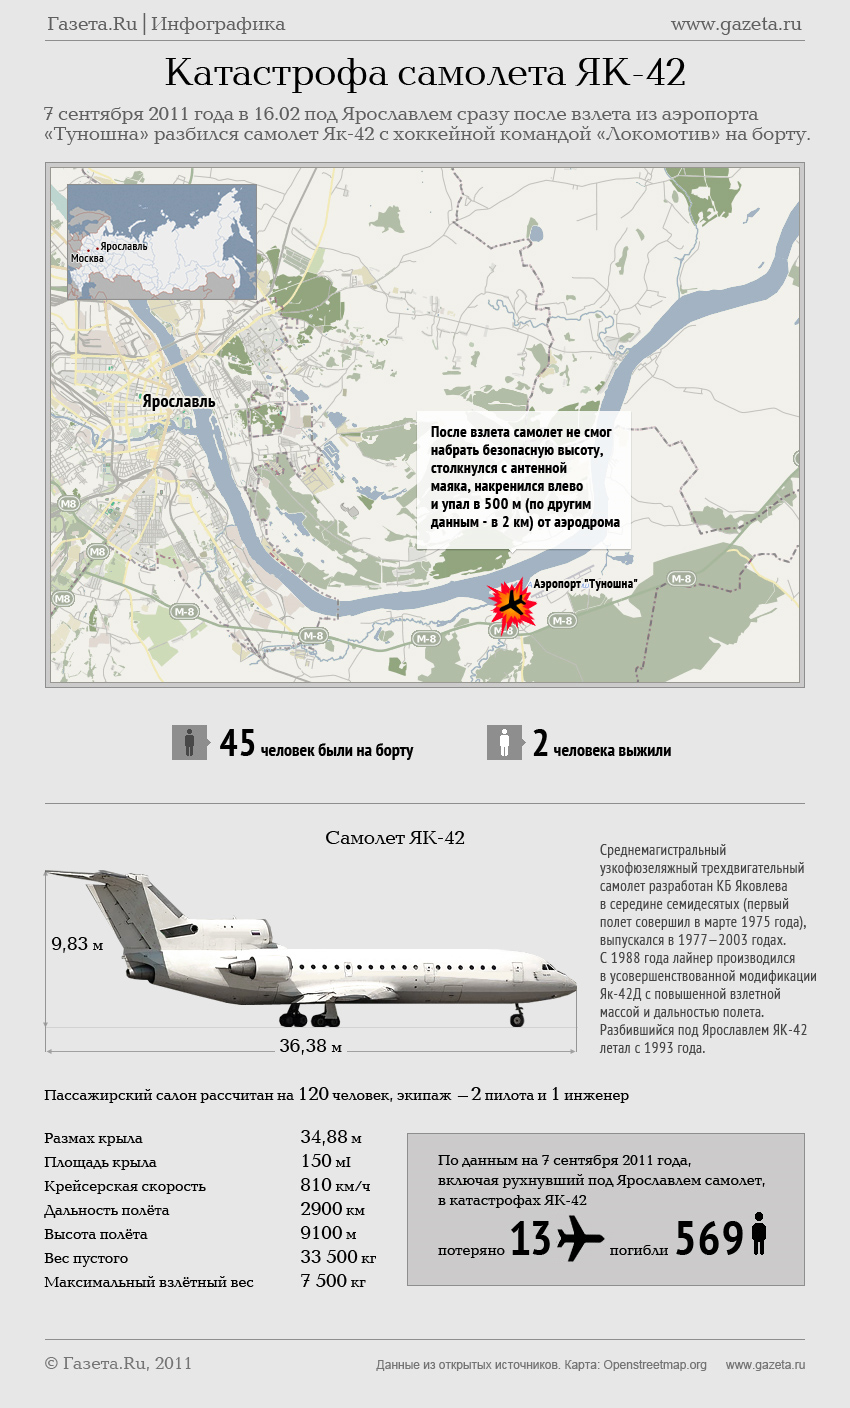 ИНФОГРАФИКА: Катастрофа самолета ЯК-42